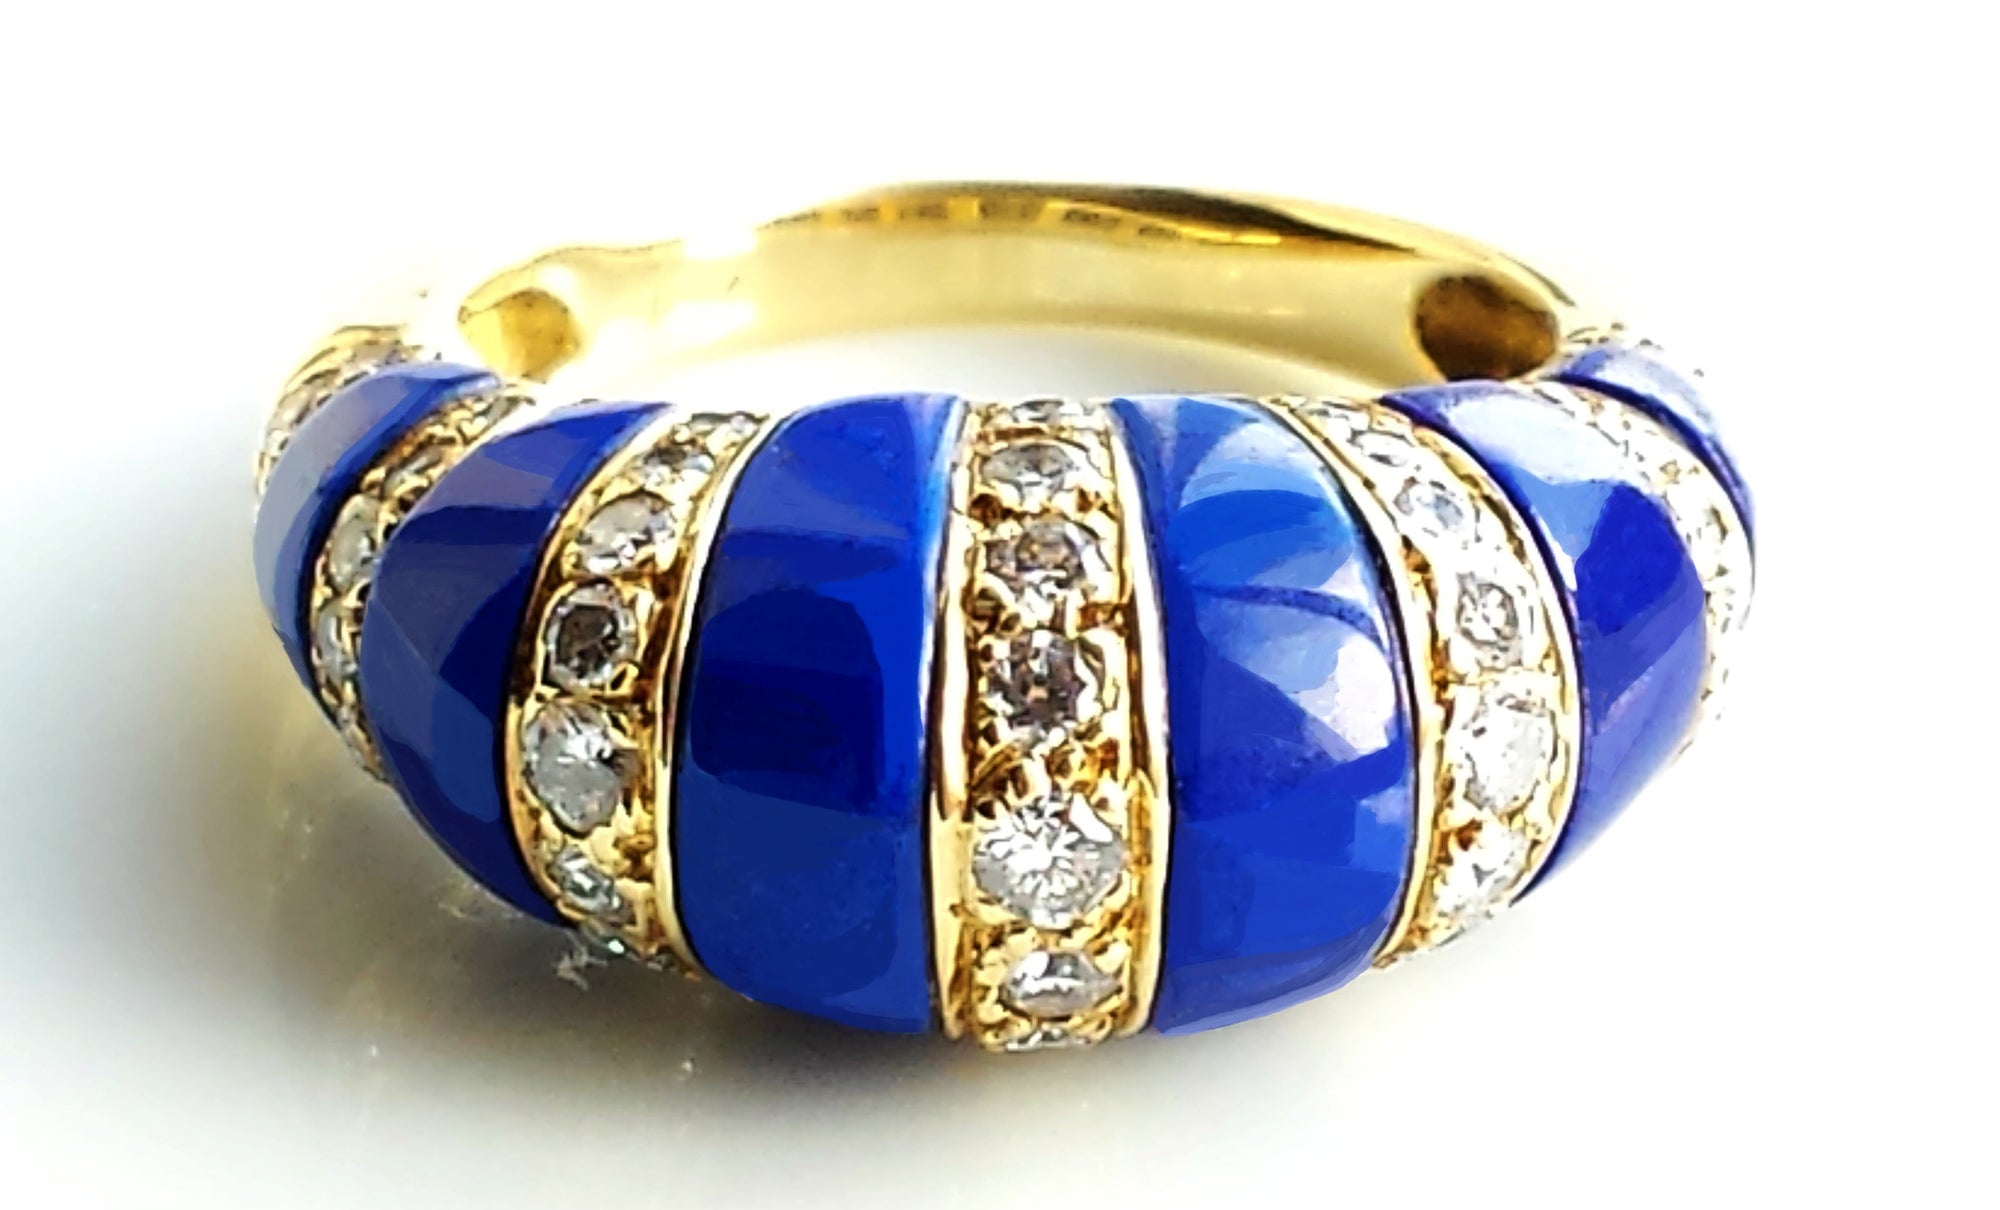 Vintage 1950s Mid Century Tiffany & Co. Lapis Lazuli & Diamond Bombe Cocktail / Dress Ring in 18K Yellow Gold